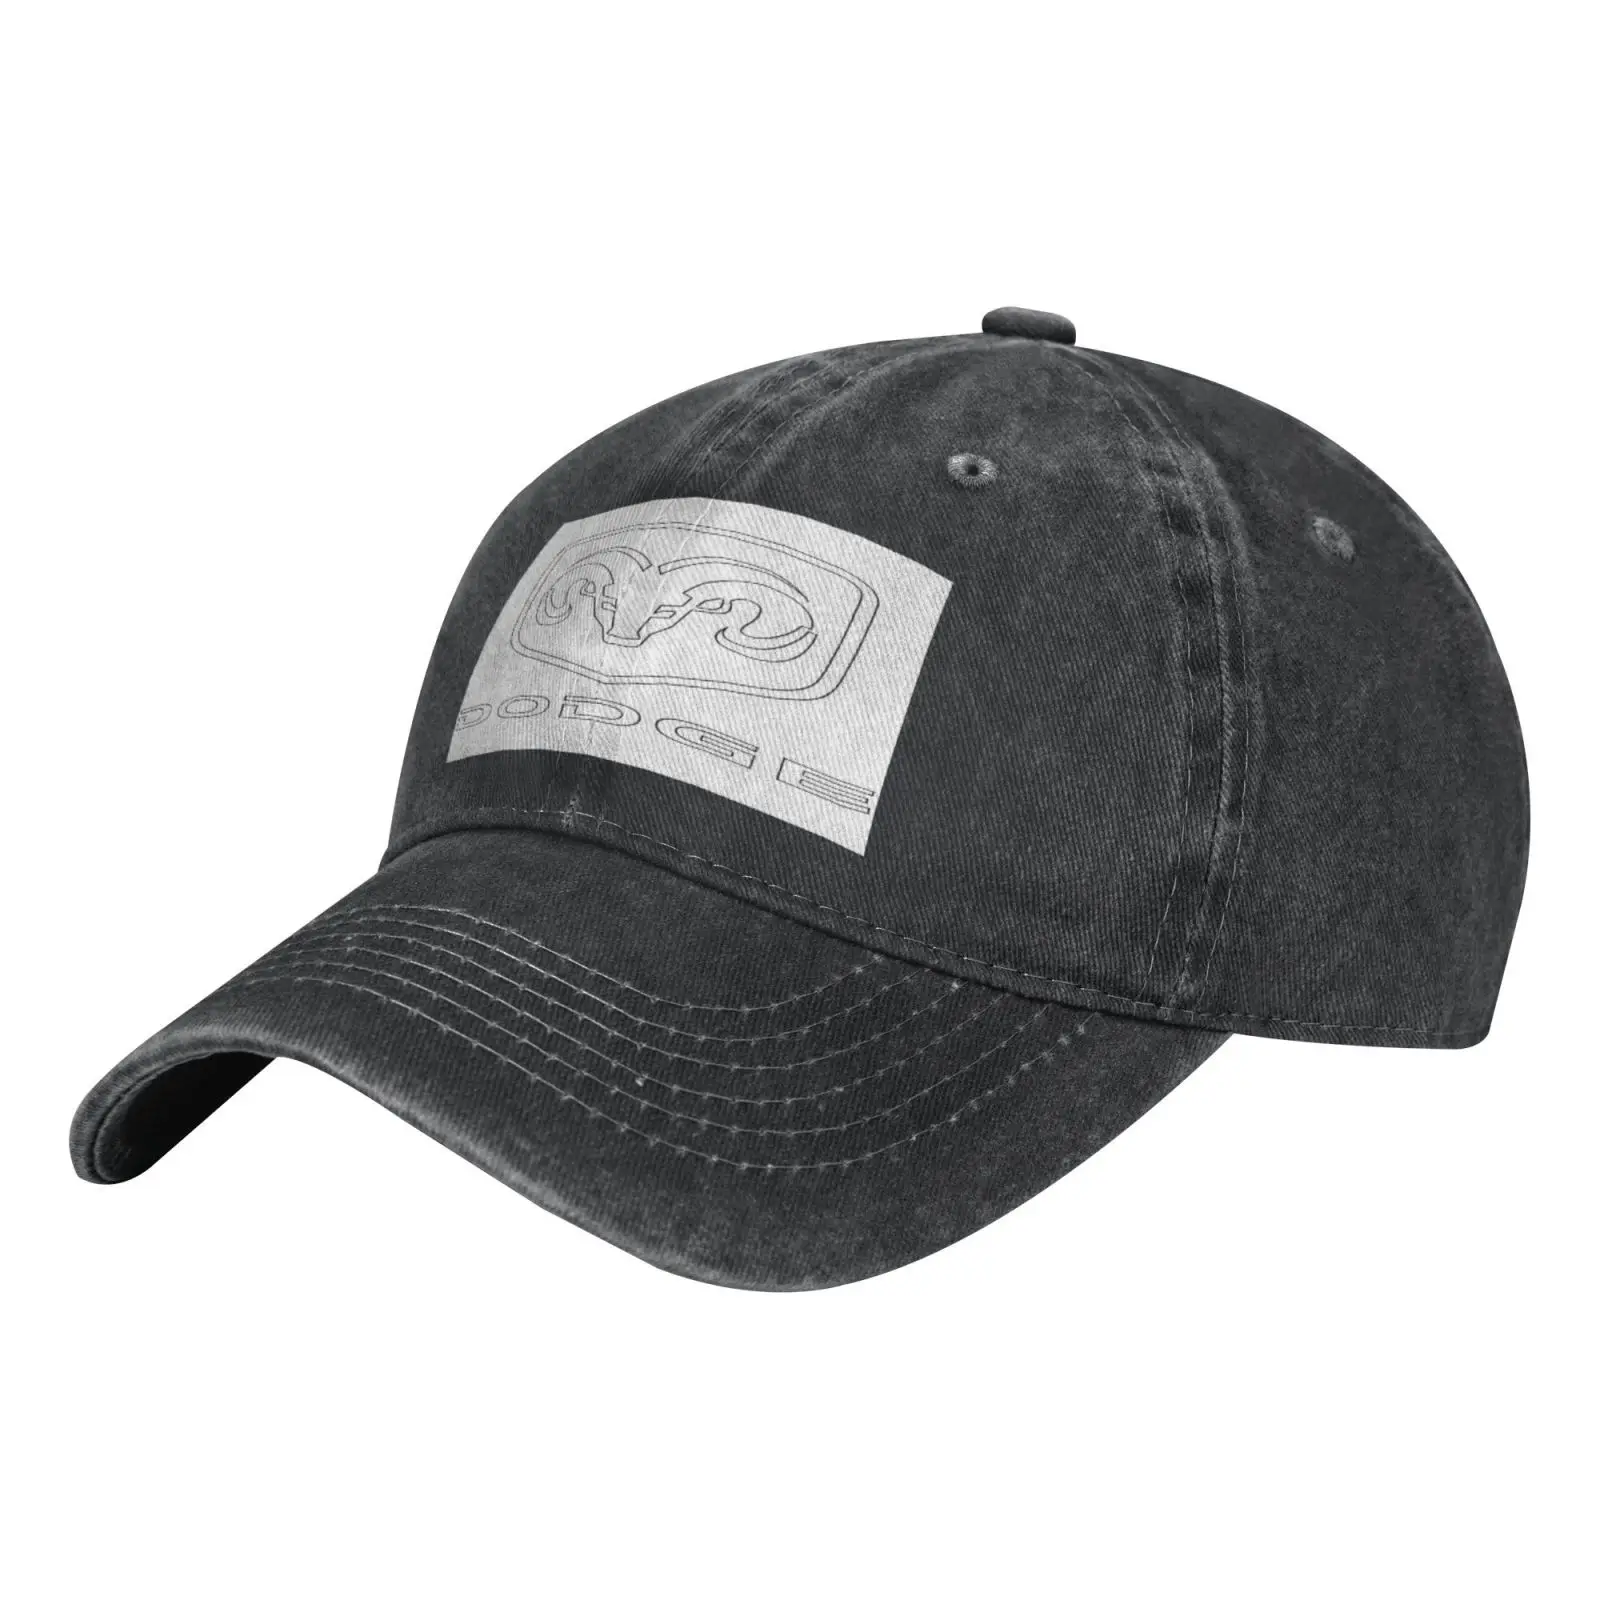 

Кепка Dodge 856, берет, мужские шапки, бейсболка, кепка s, женская шапка, кепки для женщин, мужчин, женщин, Мужская кепка 2021, модные шапки для мужчин